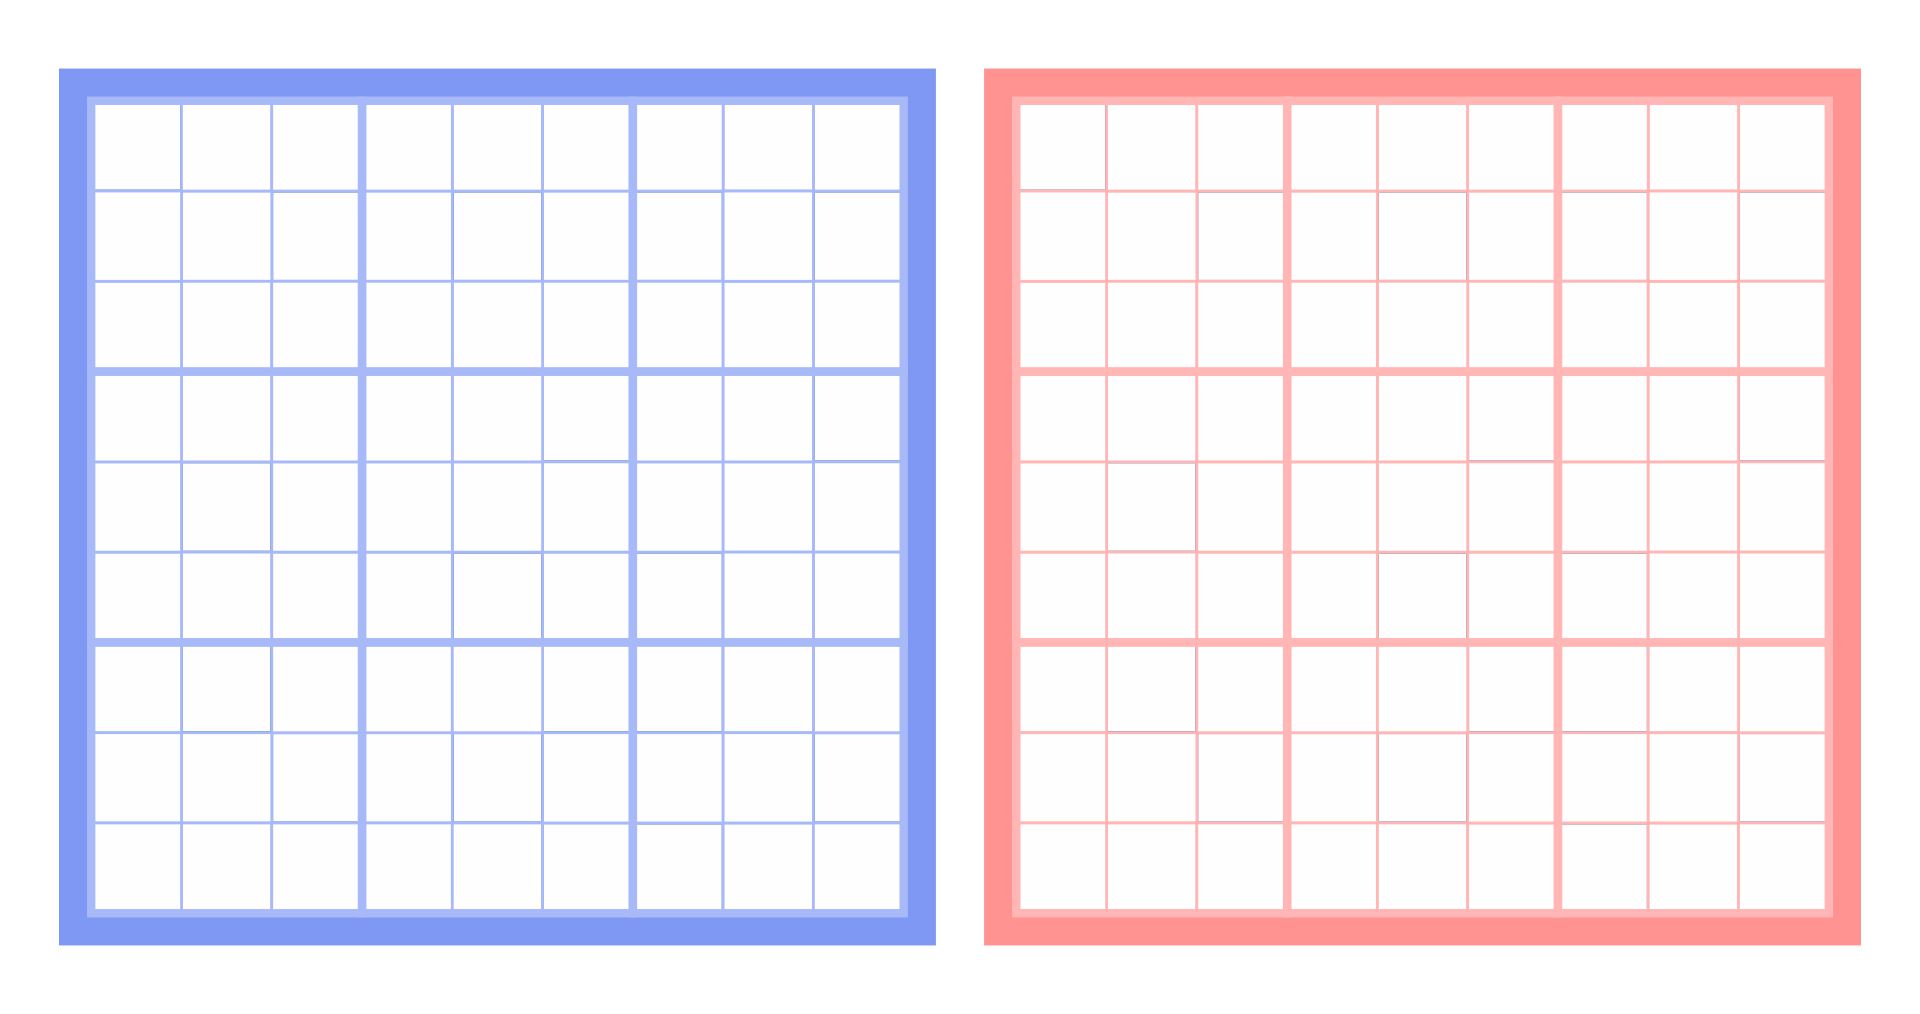 Blank Sudoku Grid